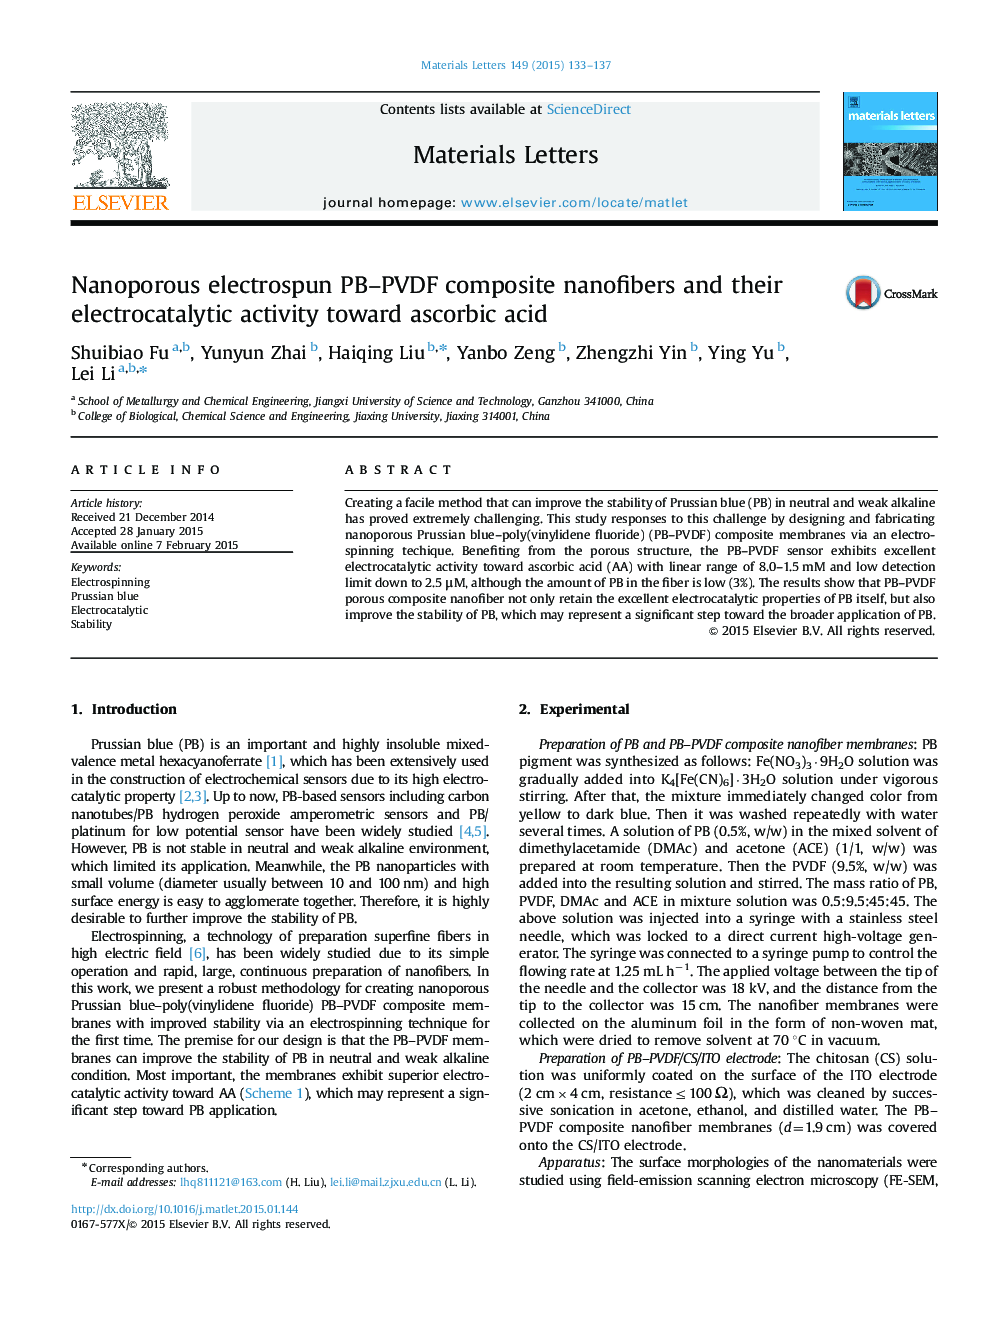 Nanoporous electrospun PB-PVDF composite nanofibers and their electrocatalytic activity toward ascorbic acid